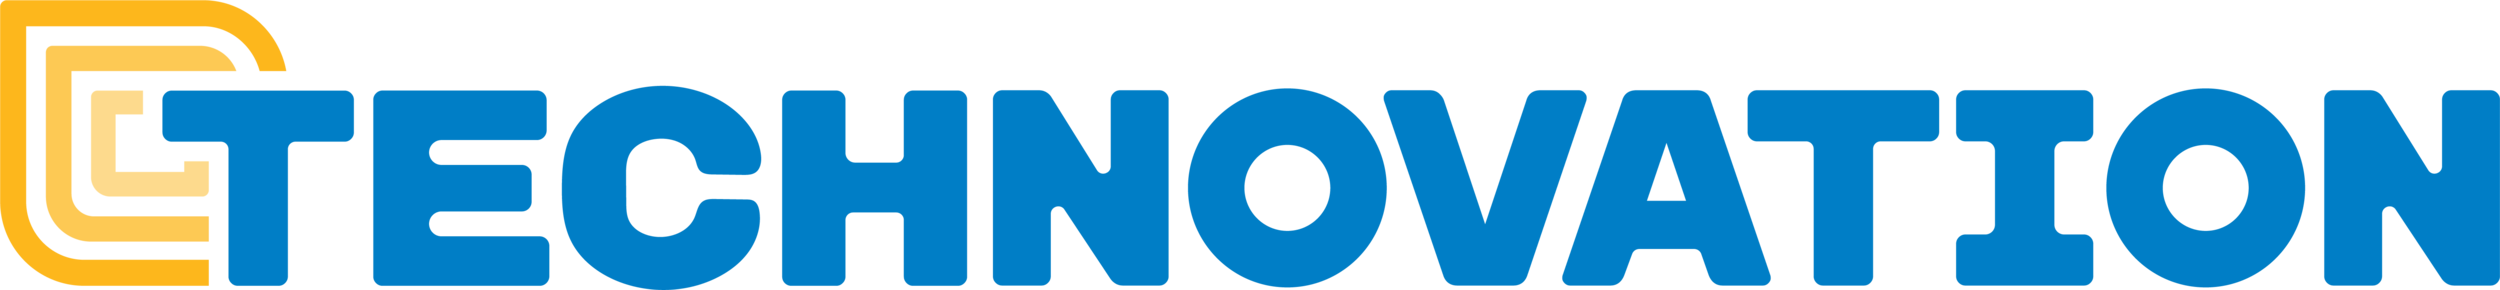 Technovation-Logo-2019_Main-CMYK.png